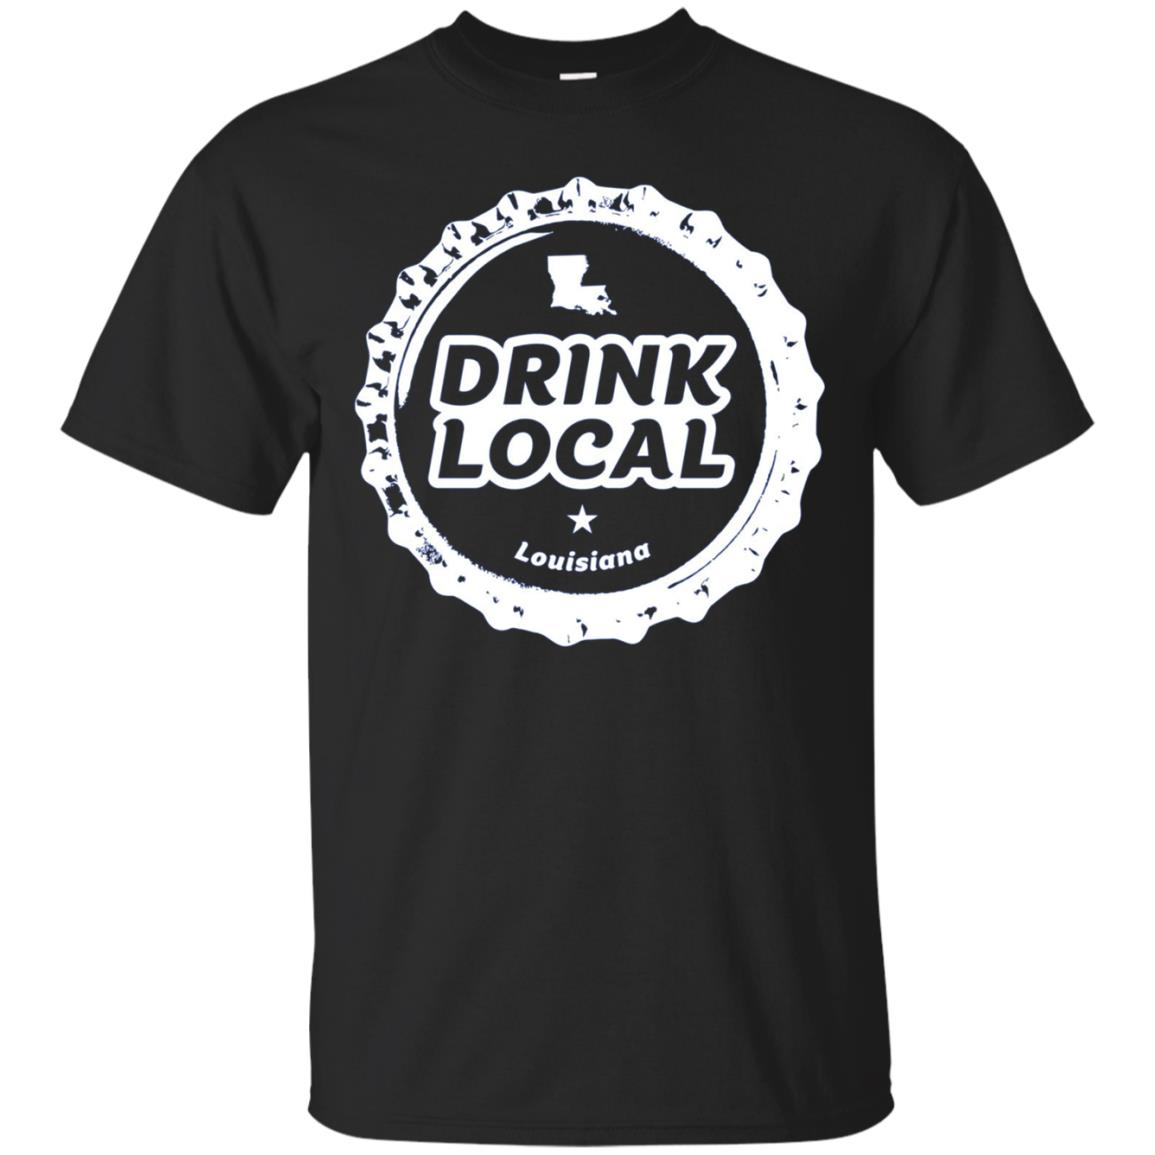 Drink Local Louisiana Craft Beer Bottle Cap Shirt